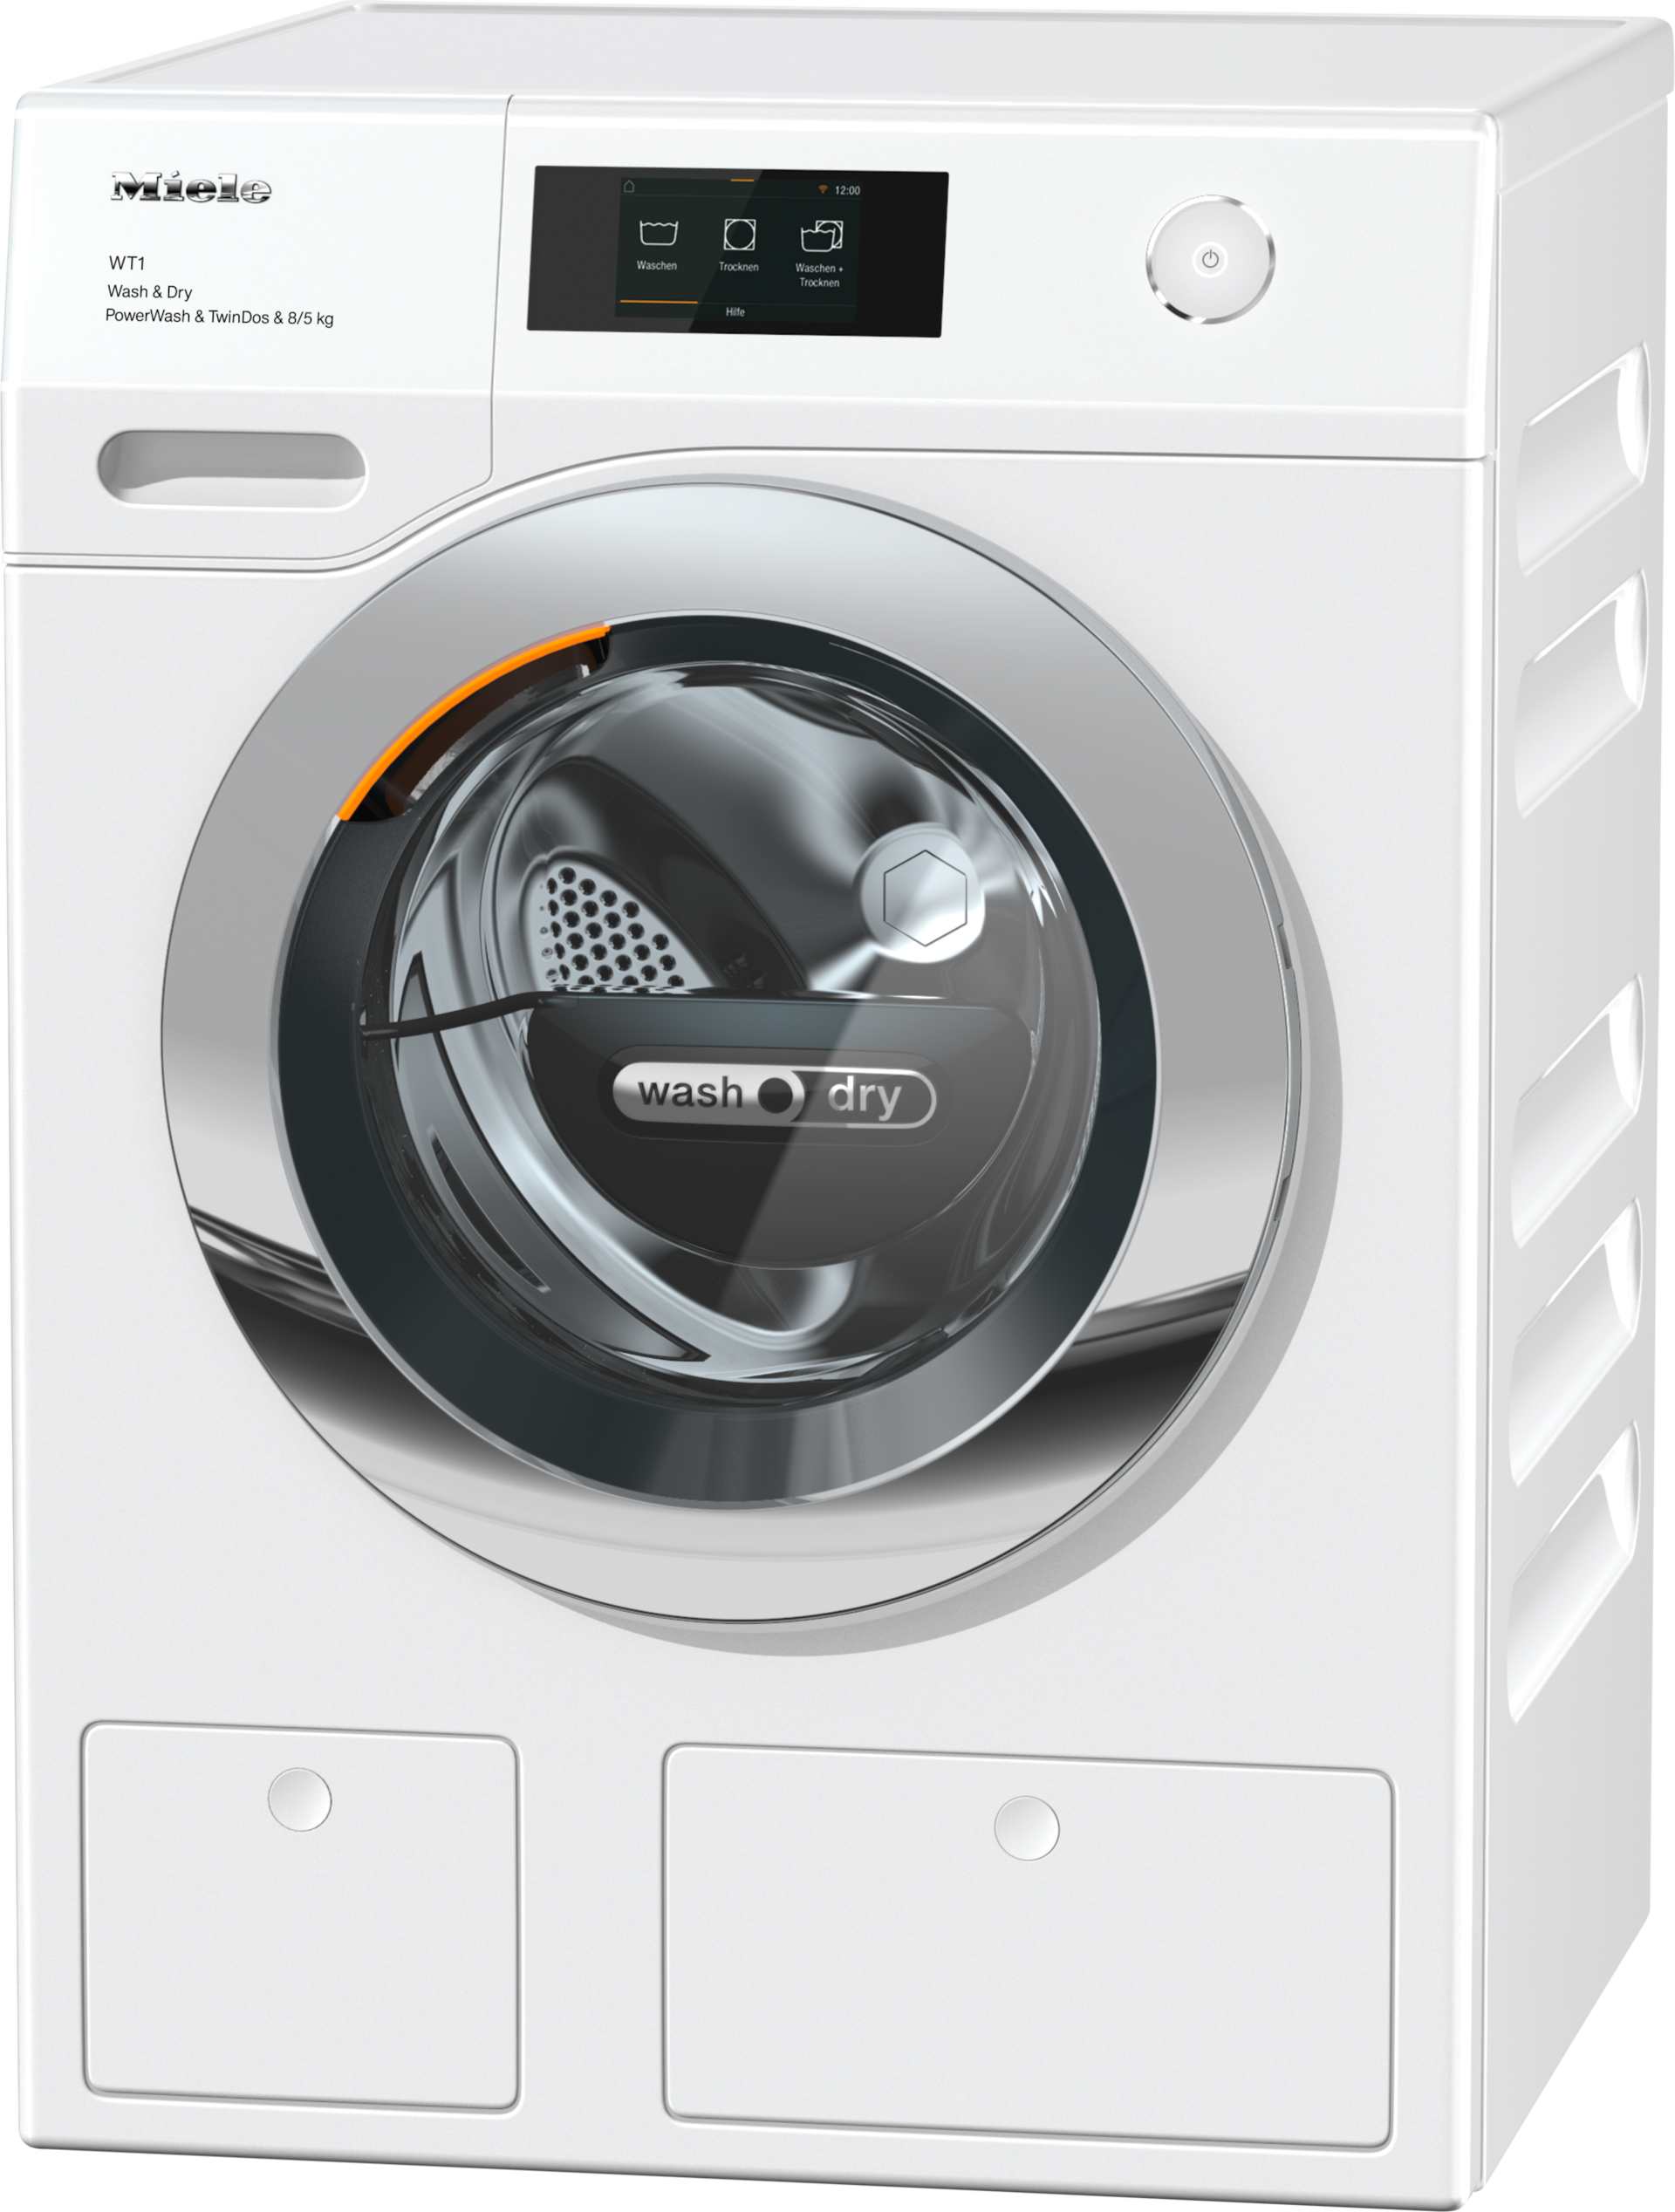 Waschmaschinen - WTR870WPM PWash&TDos 8/5kg Lotosweiß - 1